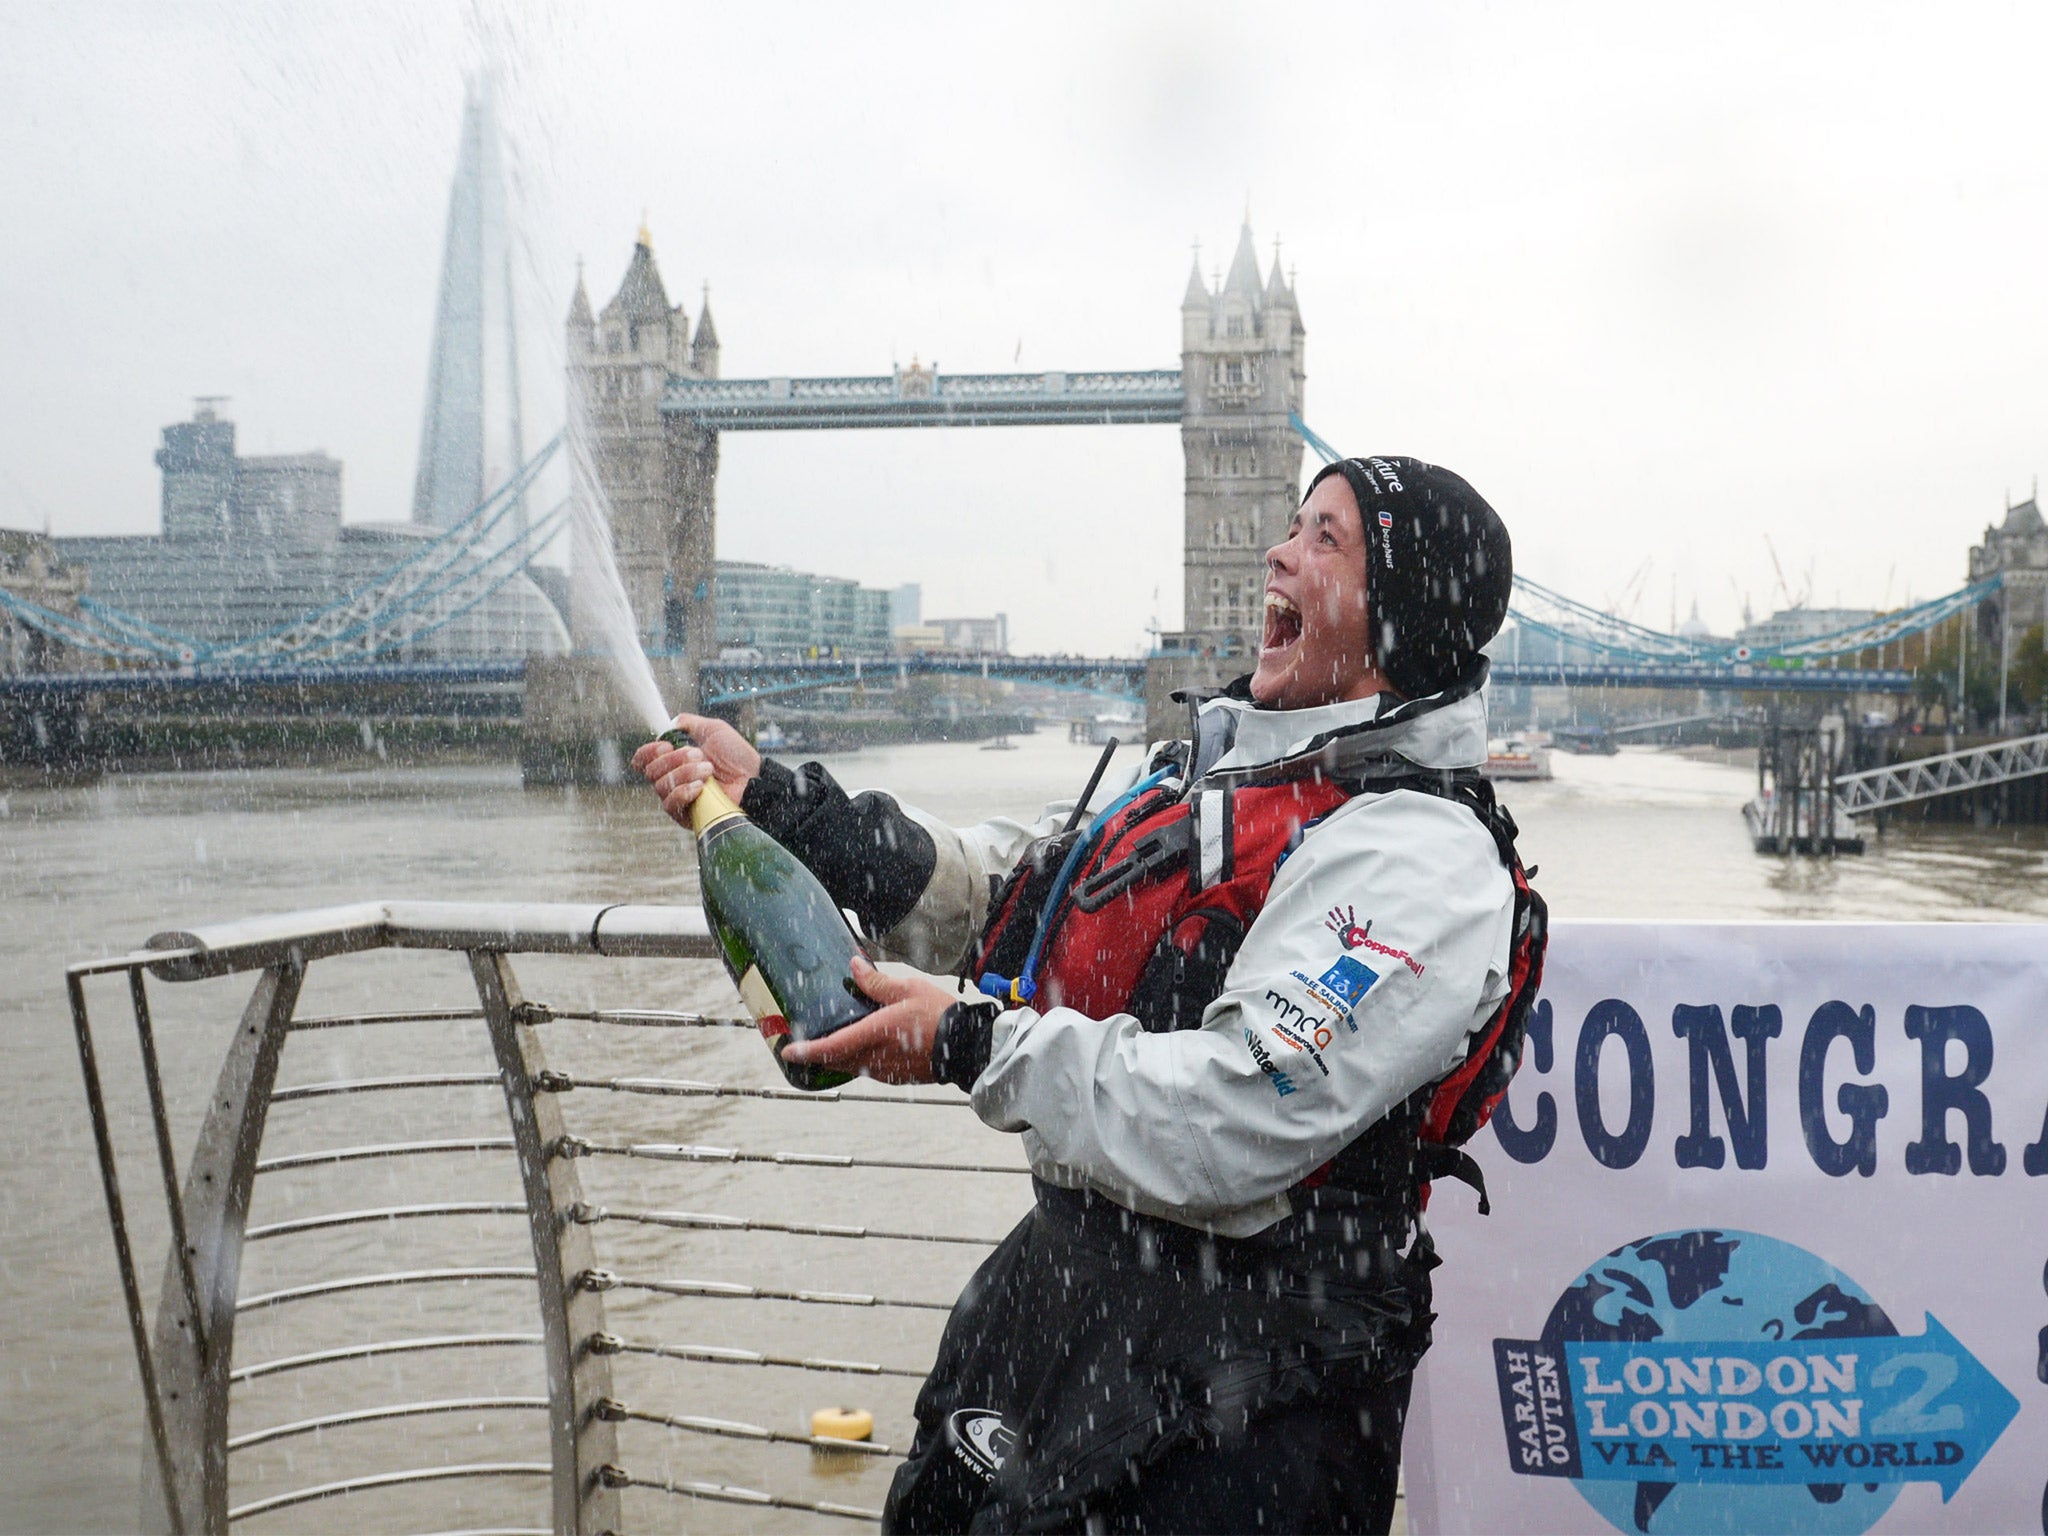 British adventurer Sarah Outen sprays champagne to celebrate after kayaking under Tower Bridge to complete her challenge